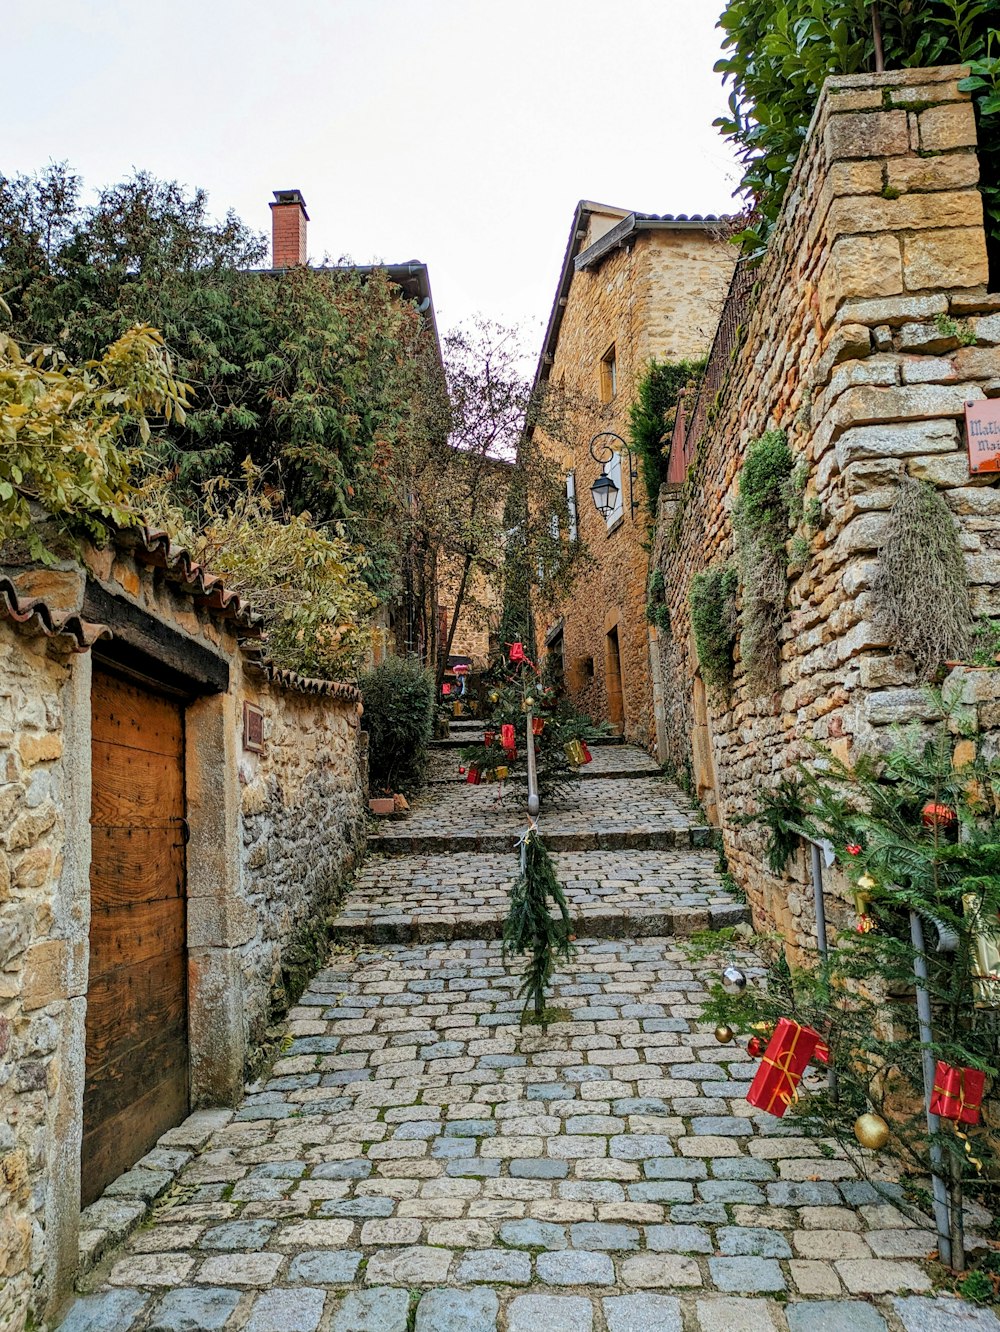 a narrow cobblestone street with stone buildings